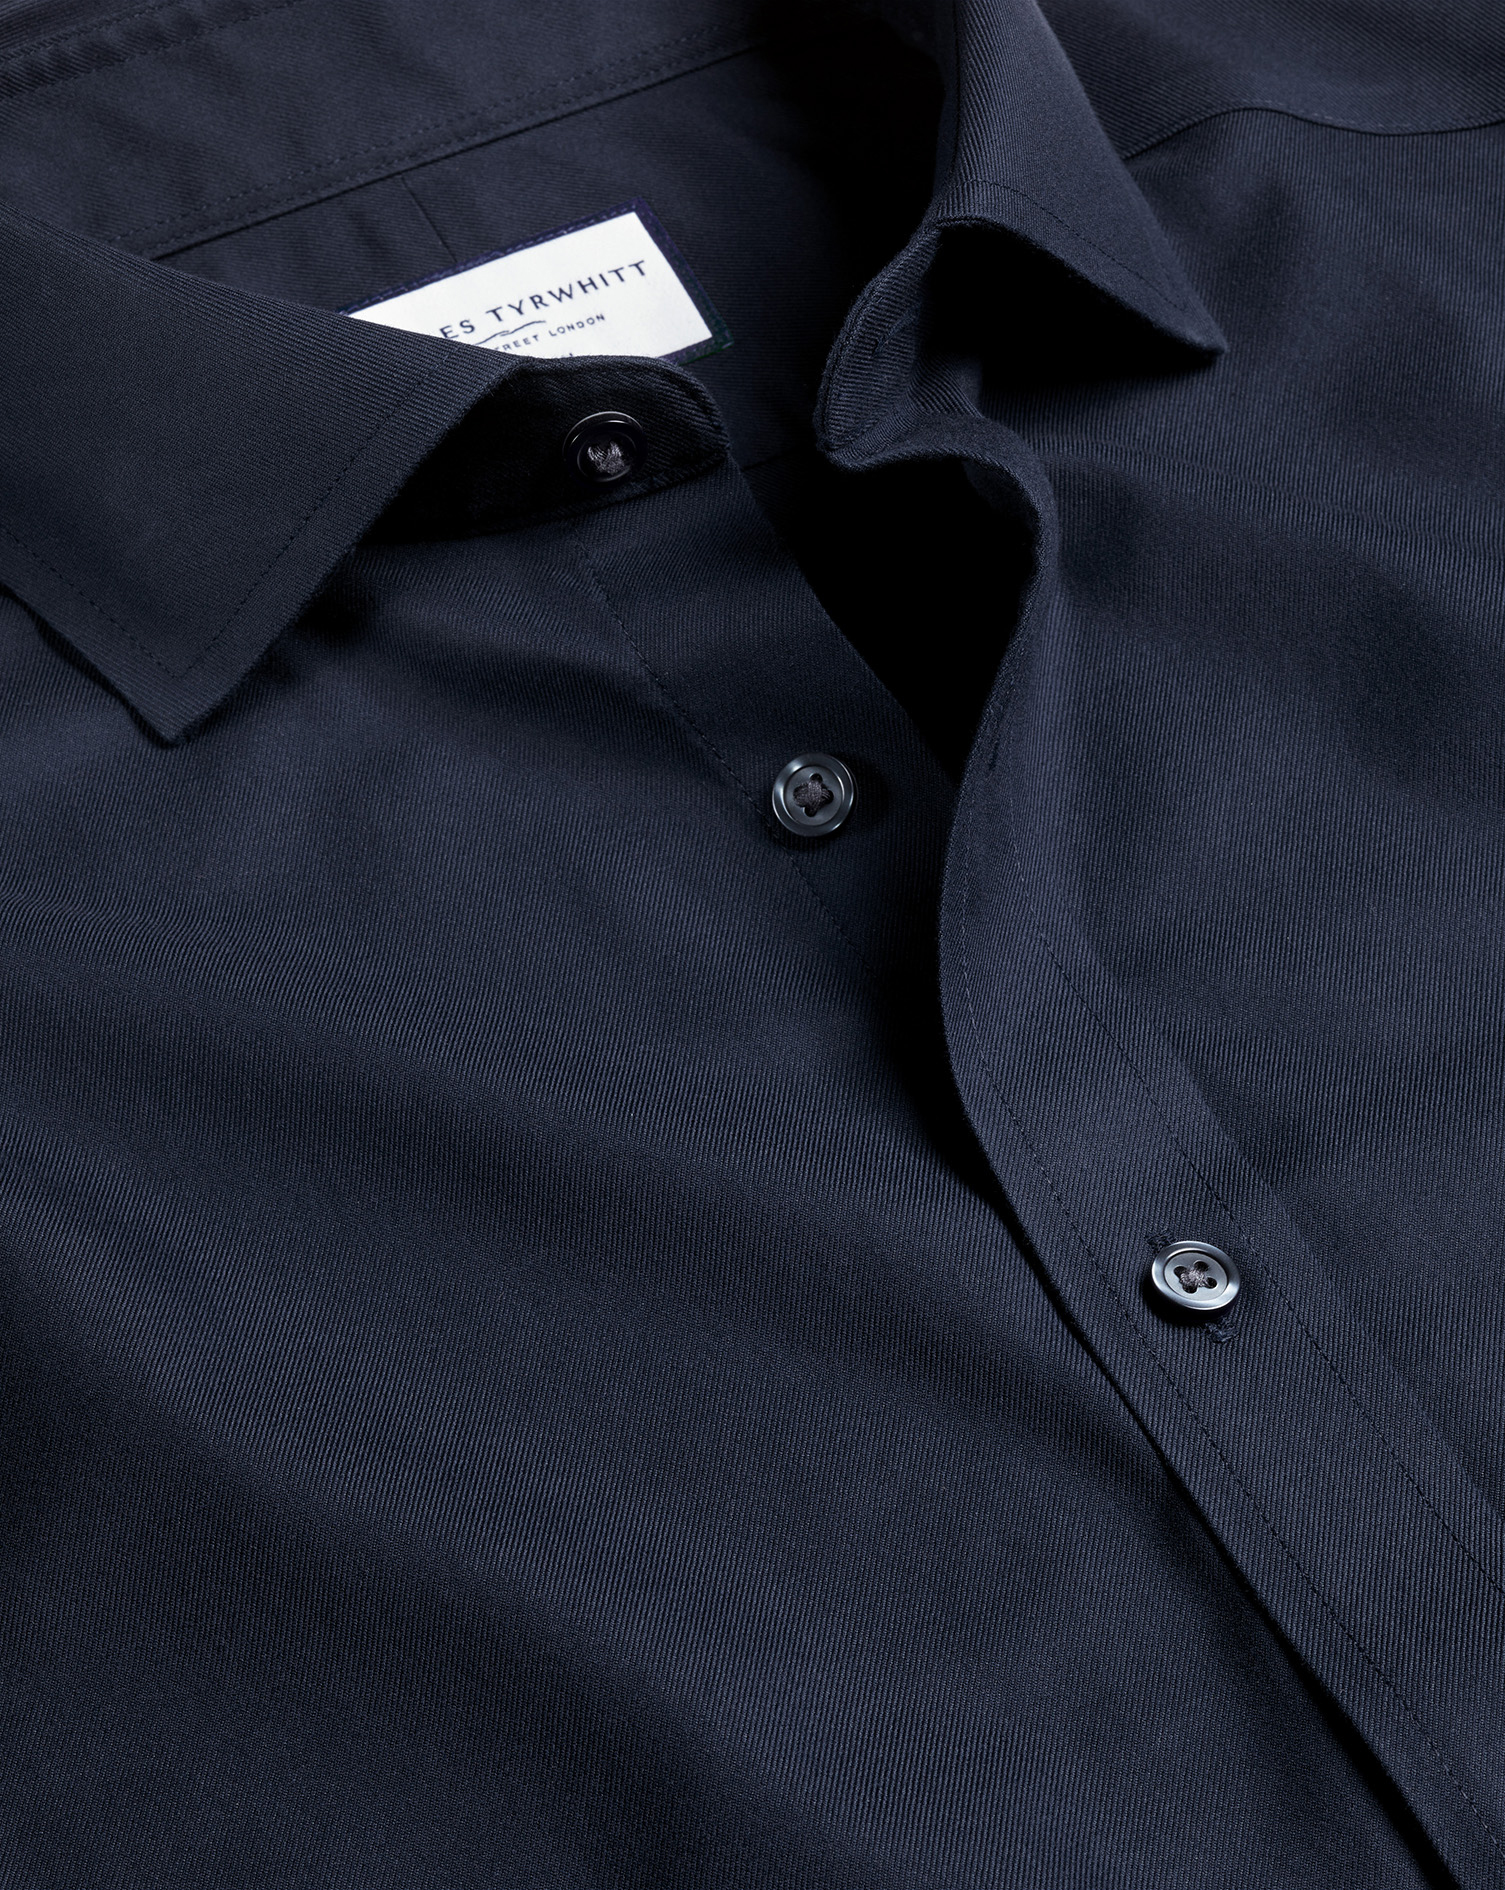 Men's Charles Tyrwhitt Cutaway Collar Non-Iron Twill Dress Shirt - Navy French Cuff Blue Size XL Cot